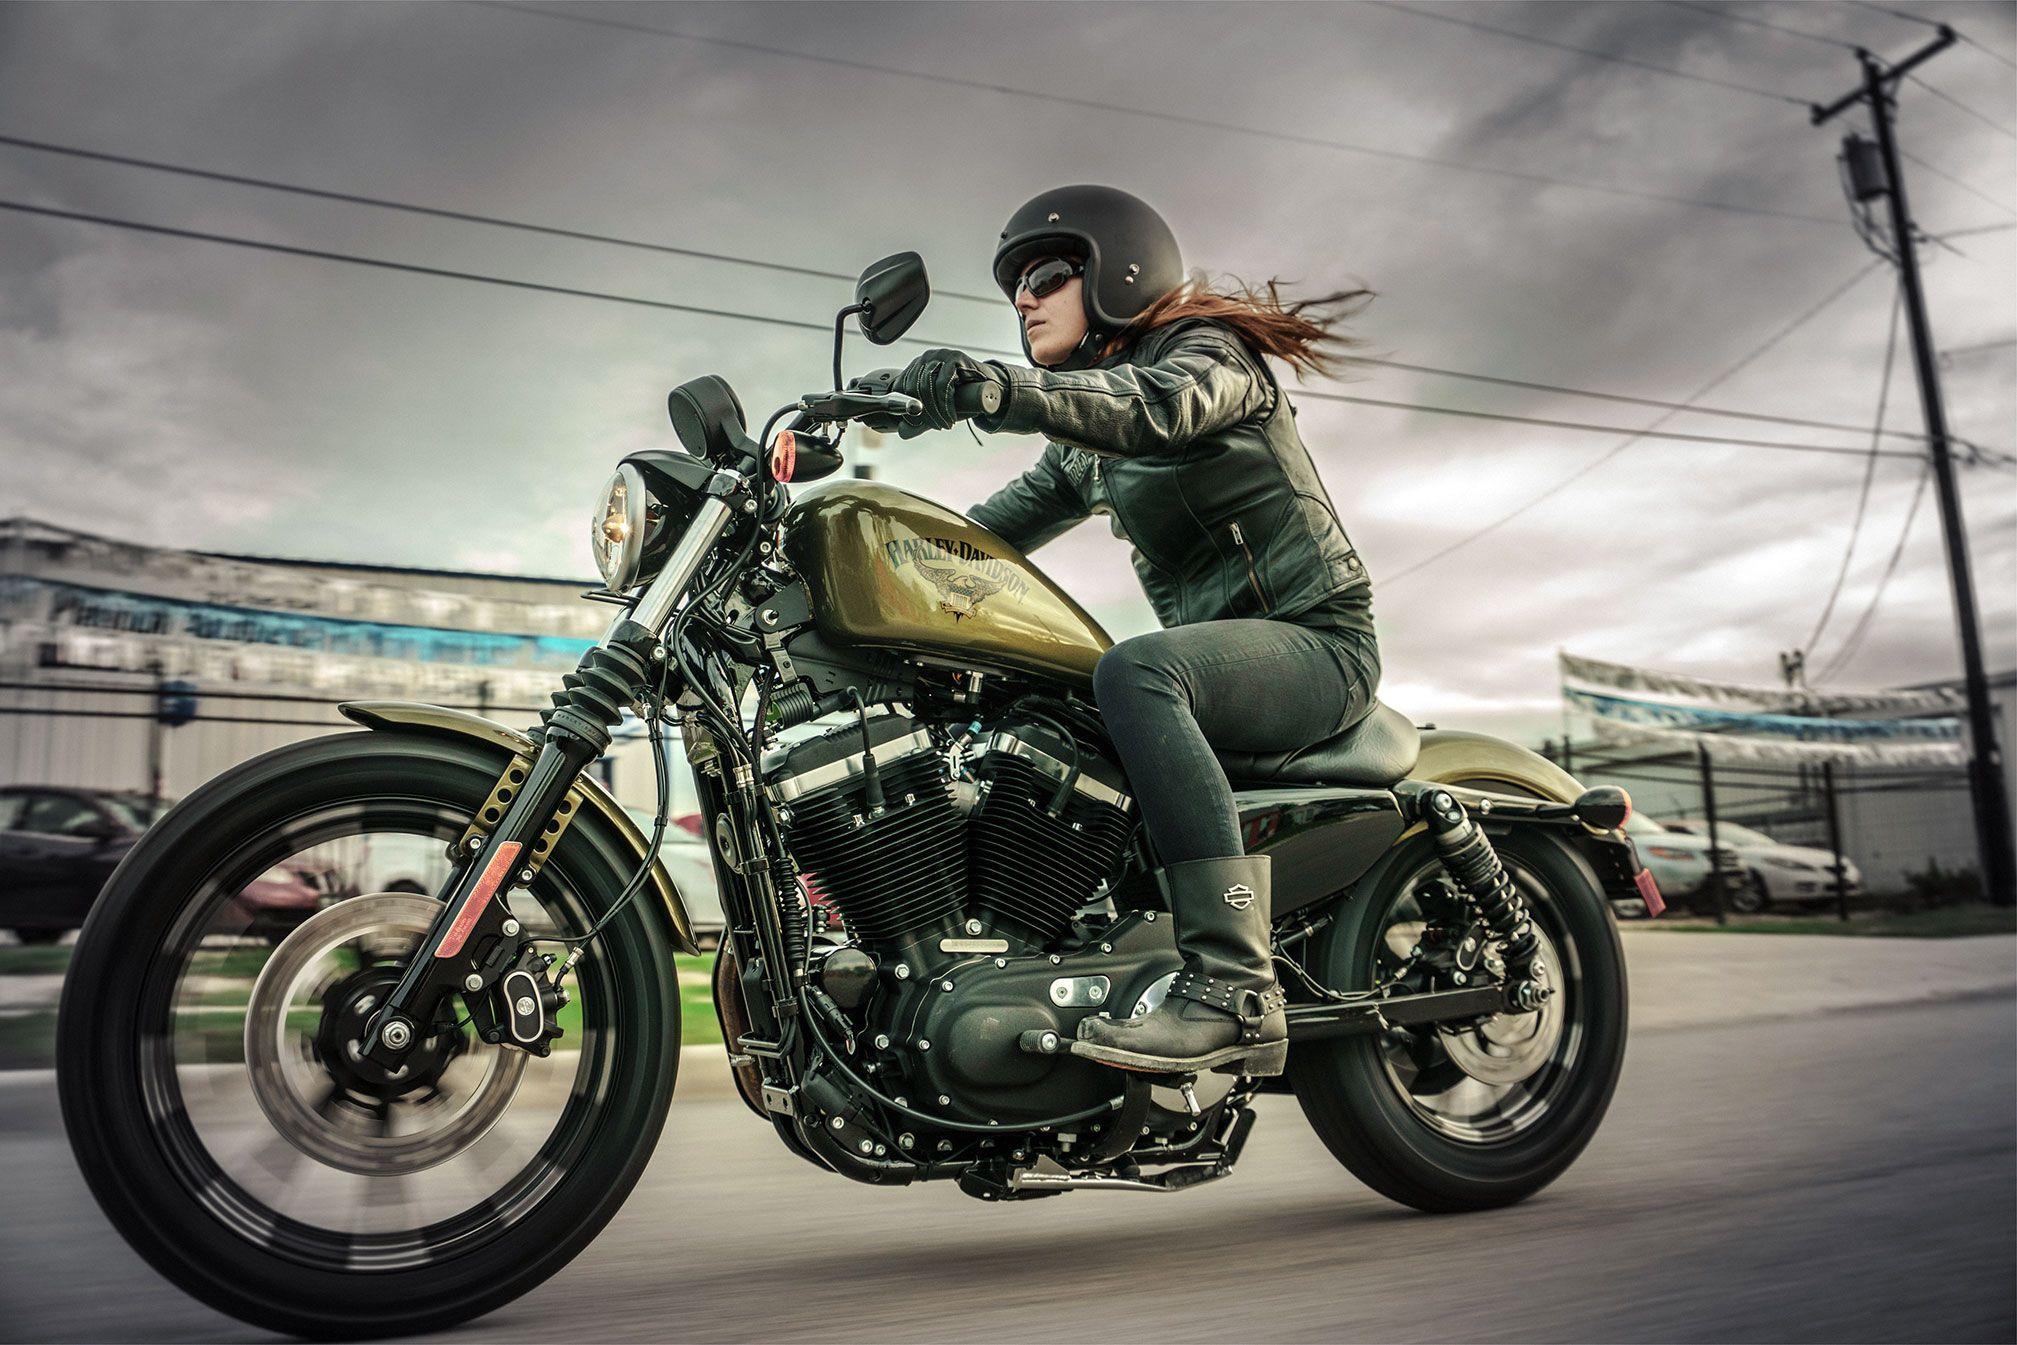 Harley Davidson Iron 883 Full HD Wallpaper